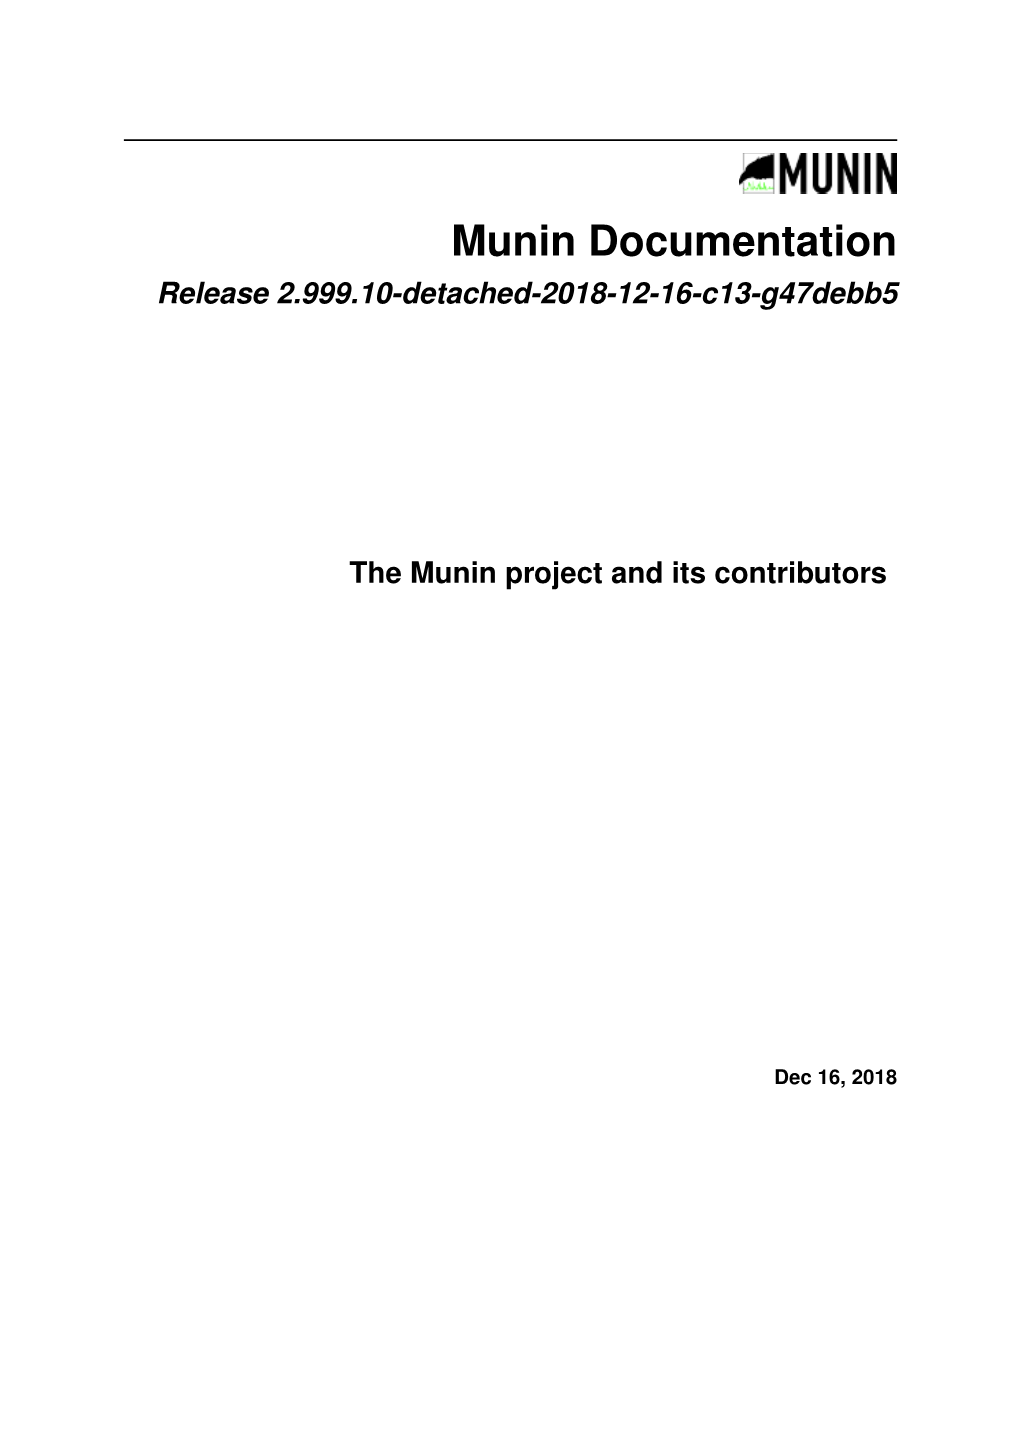 Munin Documentation Release 2.999.10-Detached-2018-12-16-C13-G47debb5